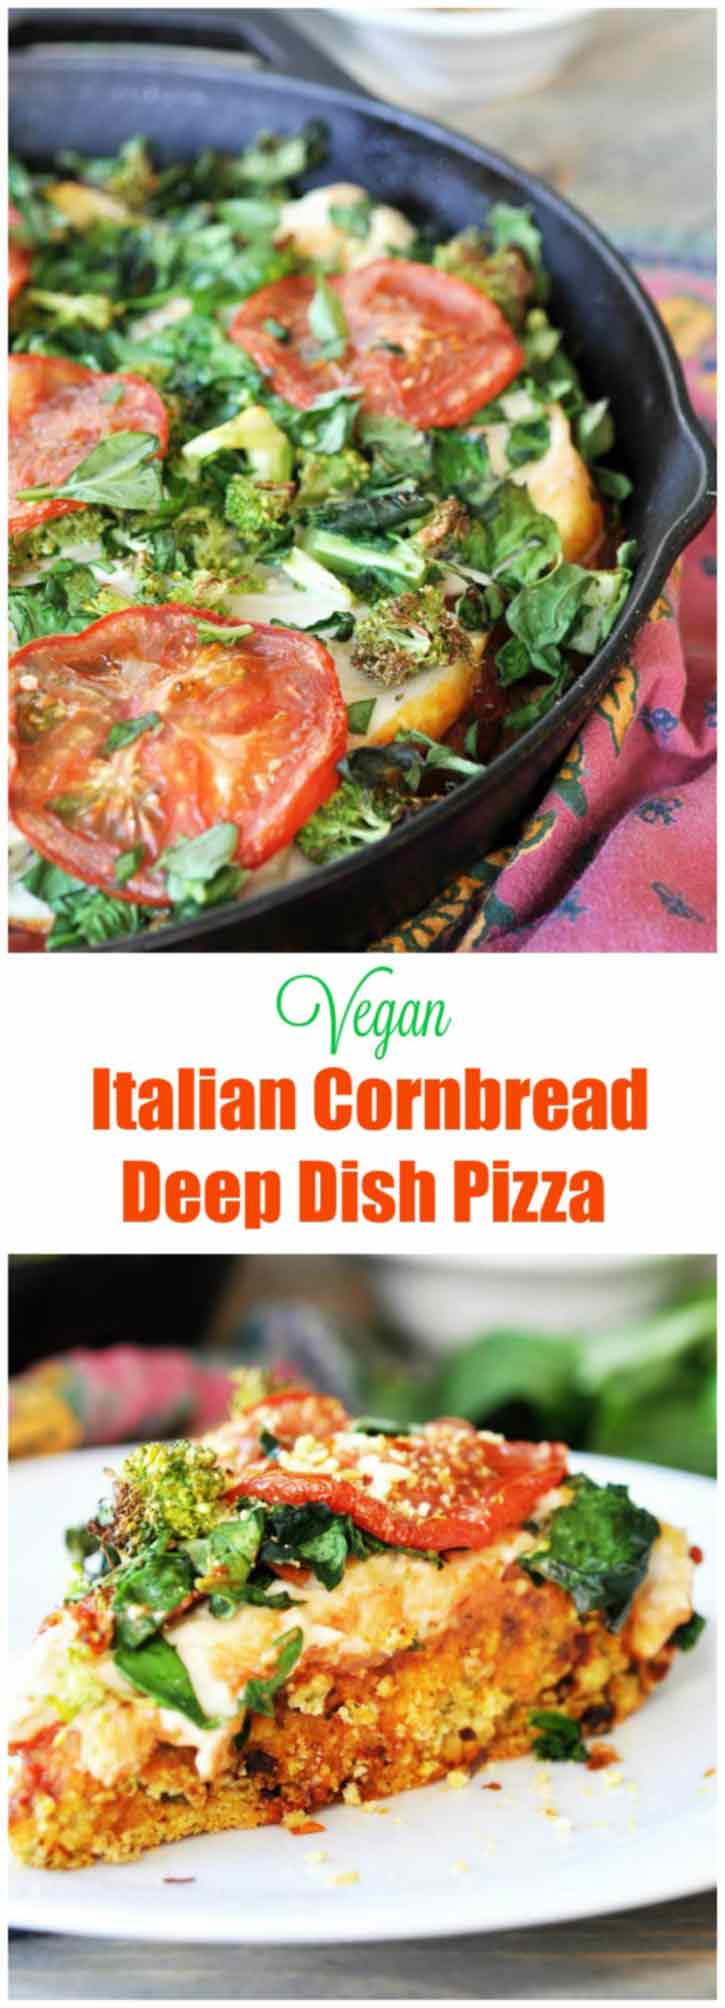 Vegan Deep Dish Pizza with Italian Cornbread Crust! This thick, gooey, delicious deep dish pizza recipe is a crowd pleaser. www.veganosity.com